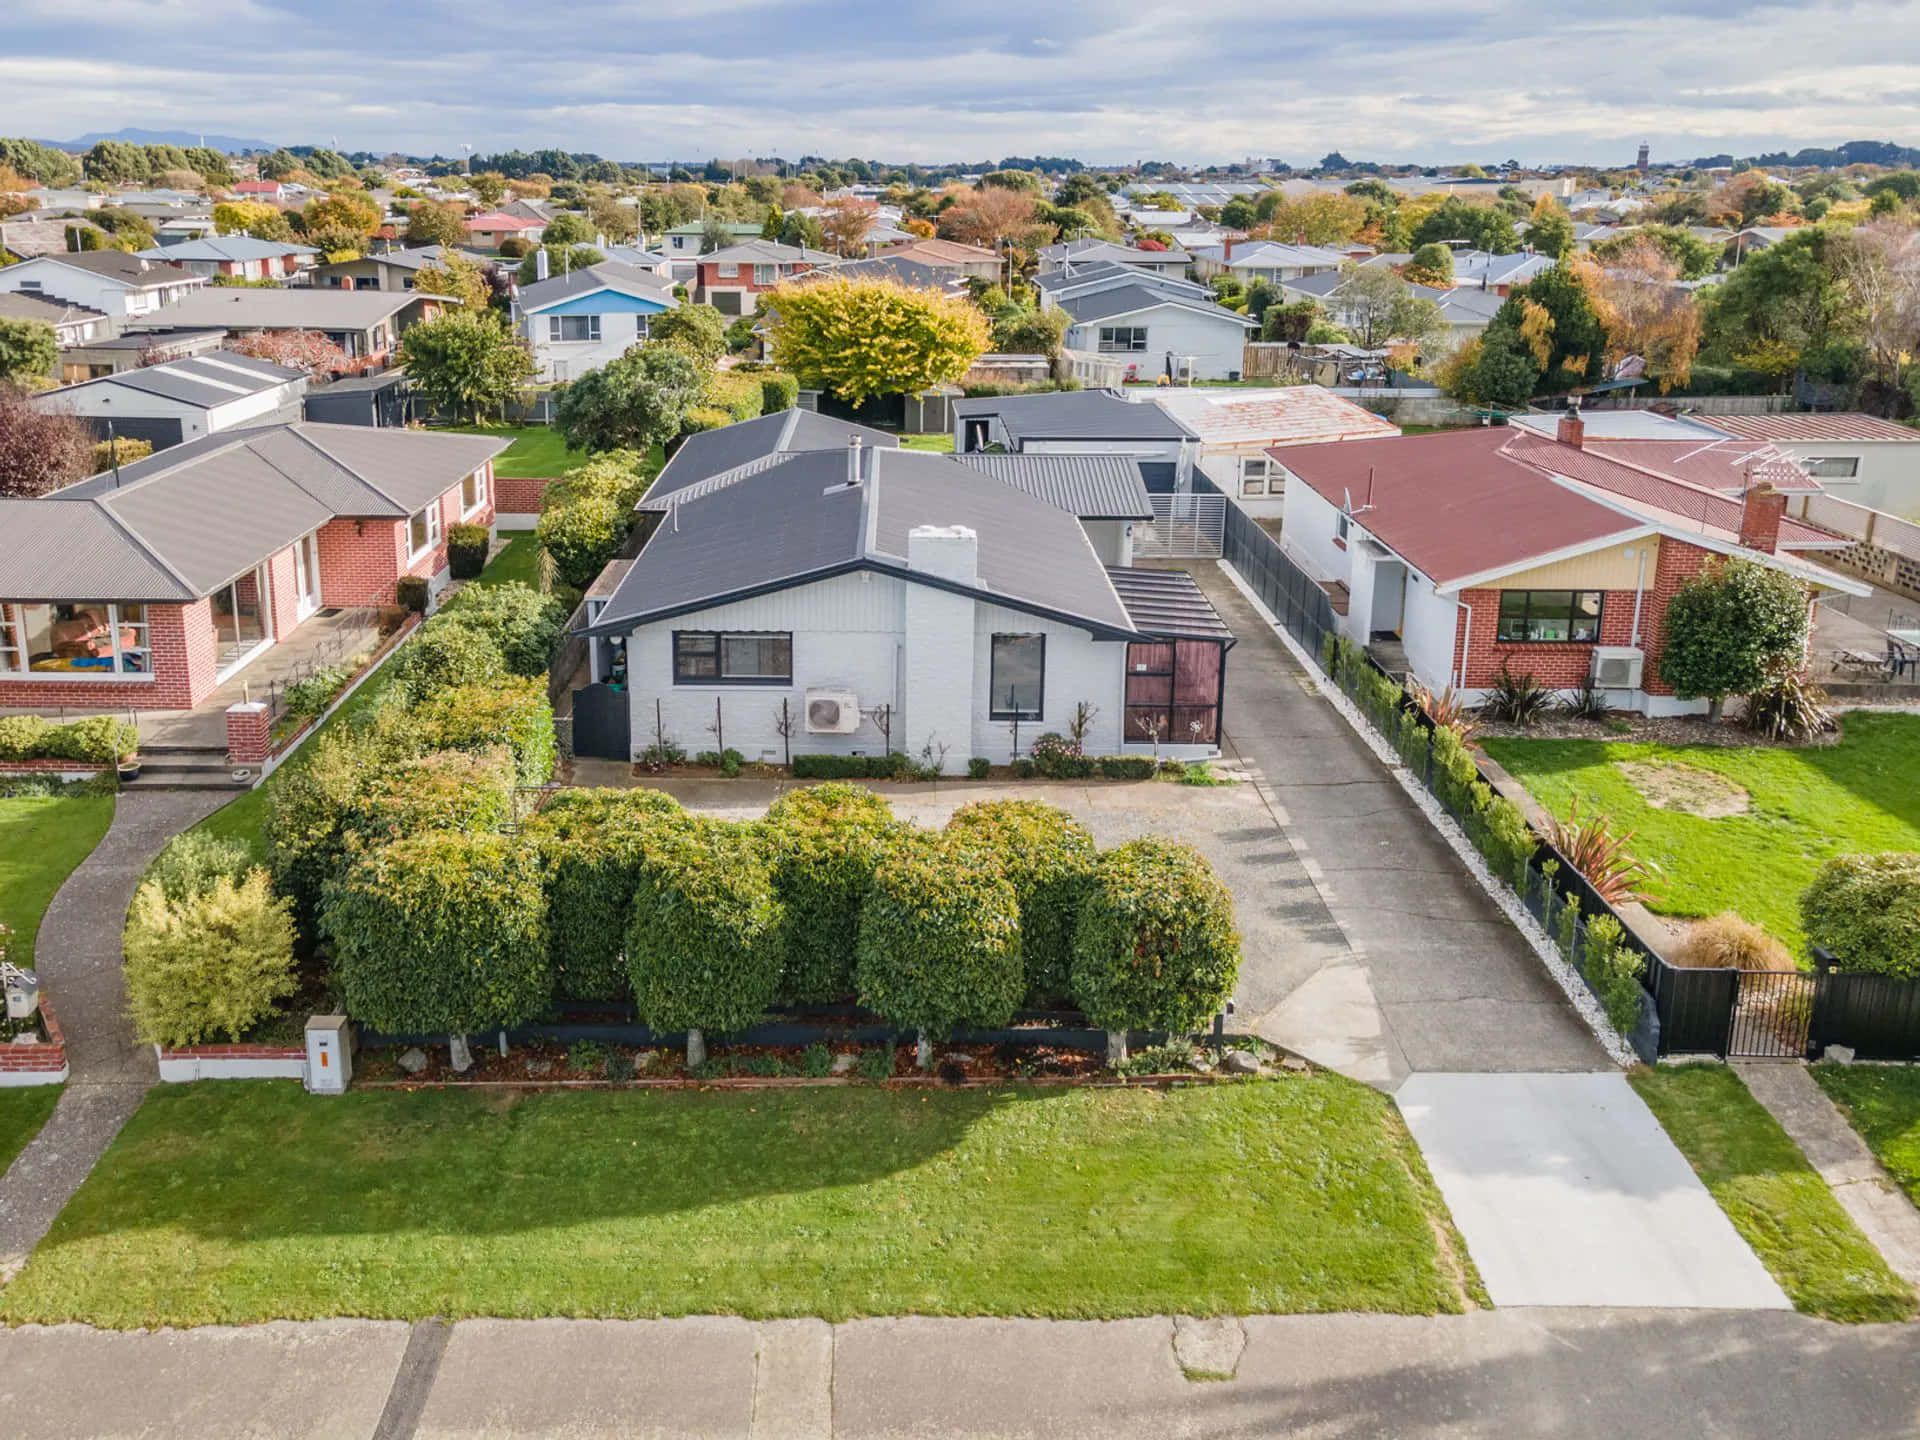 Invercargill Suburban Neighborhood Aerial View Wallpaper